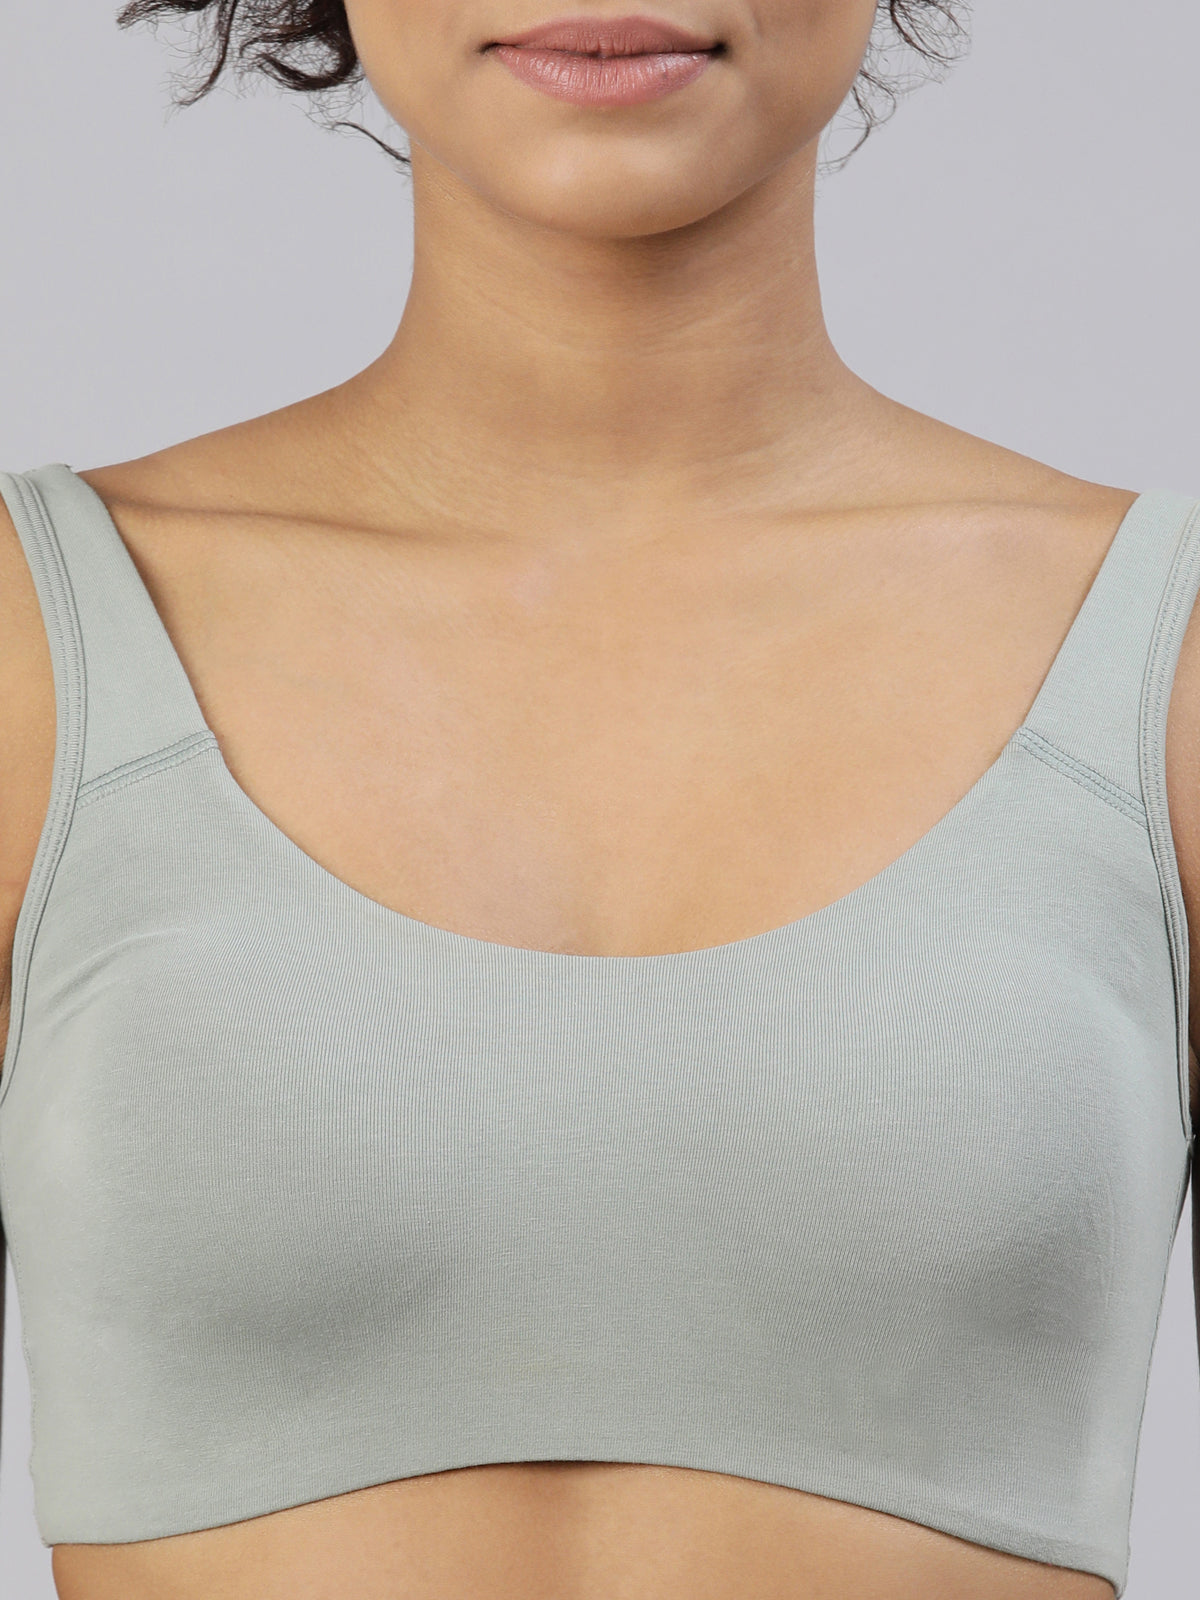 blossom-aesthetic bra-silver grey1-anti microbial treated fabric-everyday bra